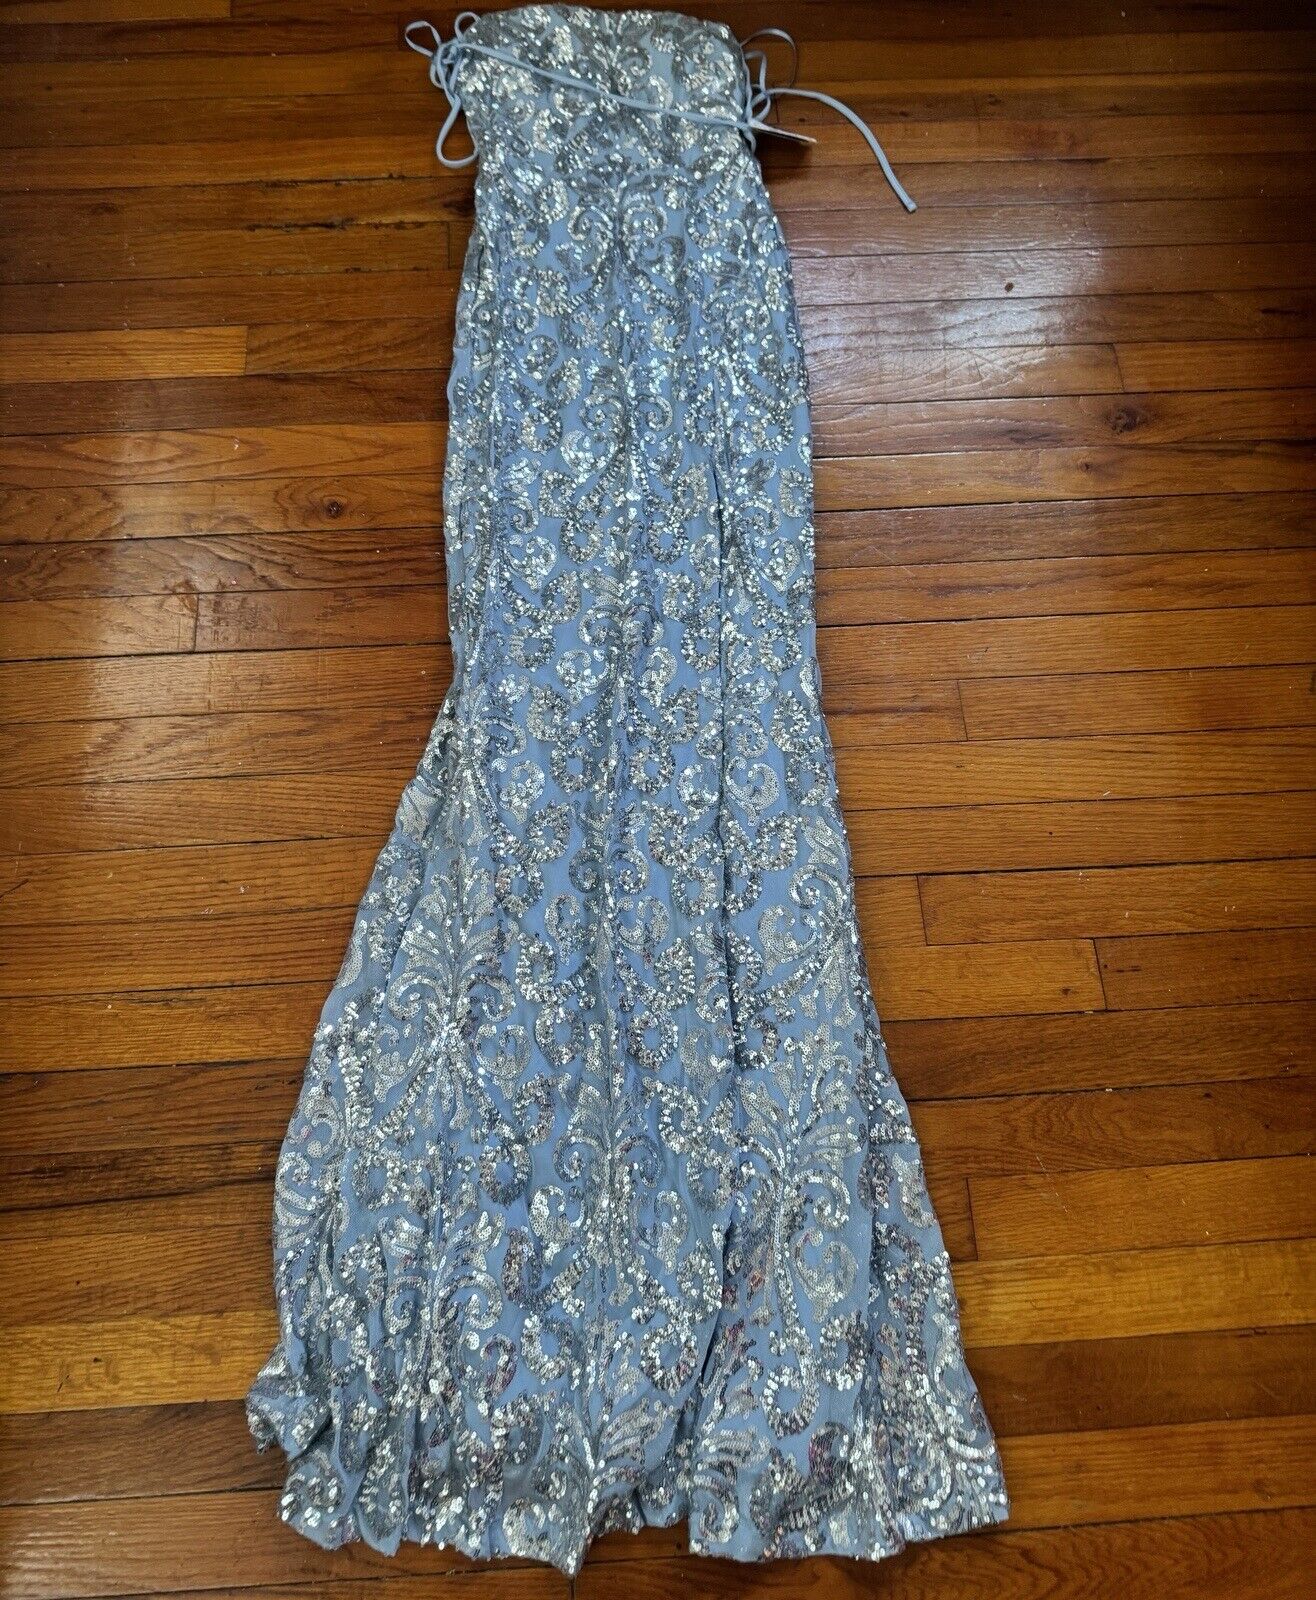 Windsor Light Blue Dress 👗, Never worn🧼, Size Small, 40$ BELOW RETAIL NO FLAW